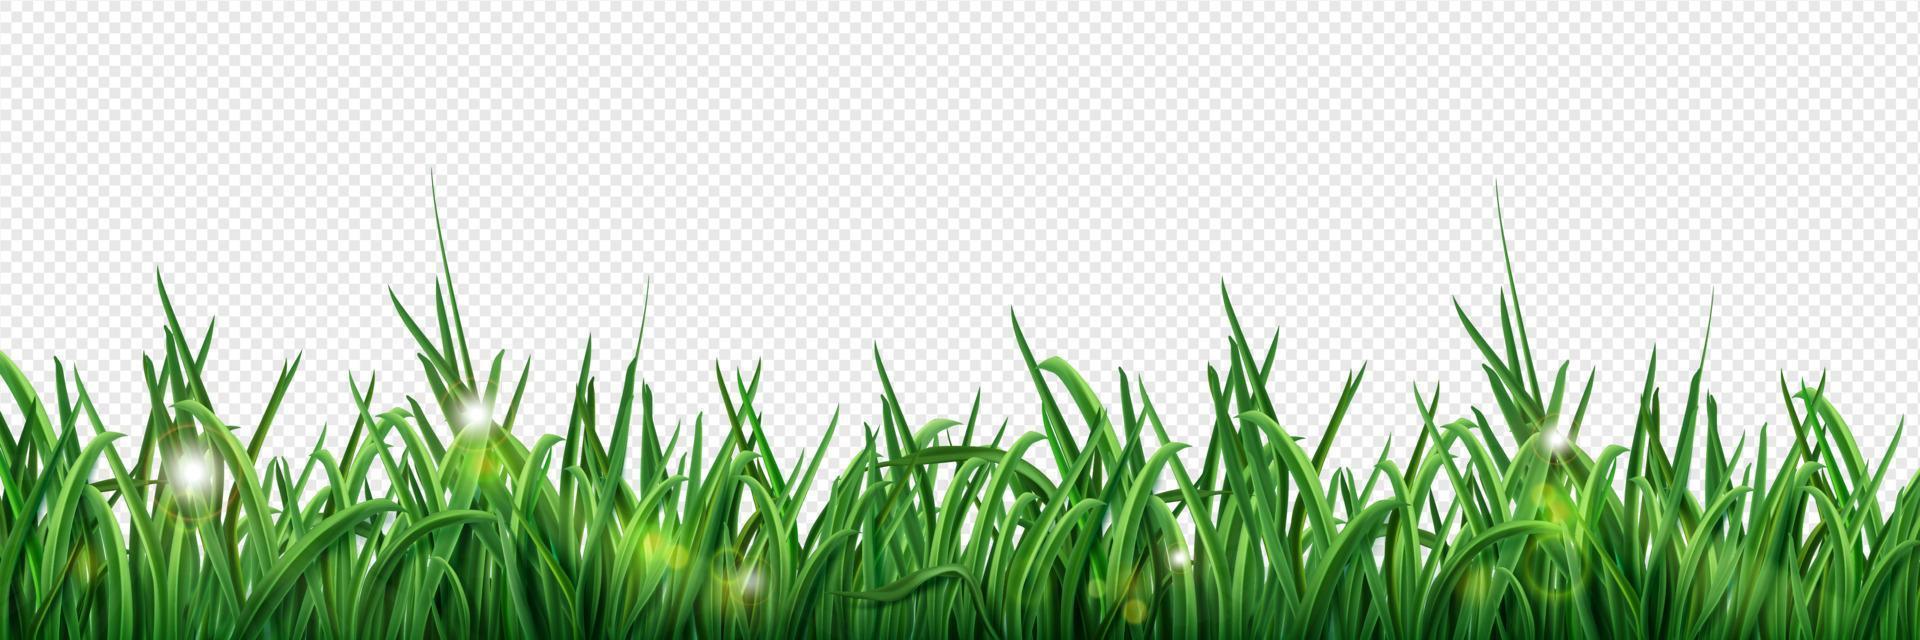 Isolated green grass lawn border illustration vector